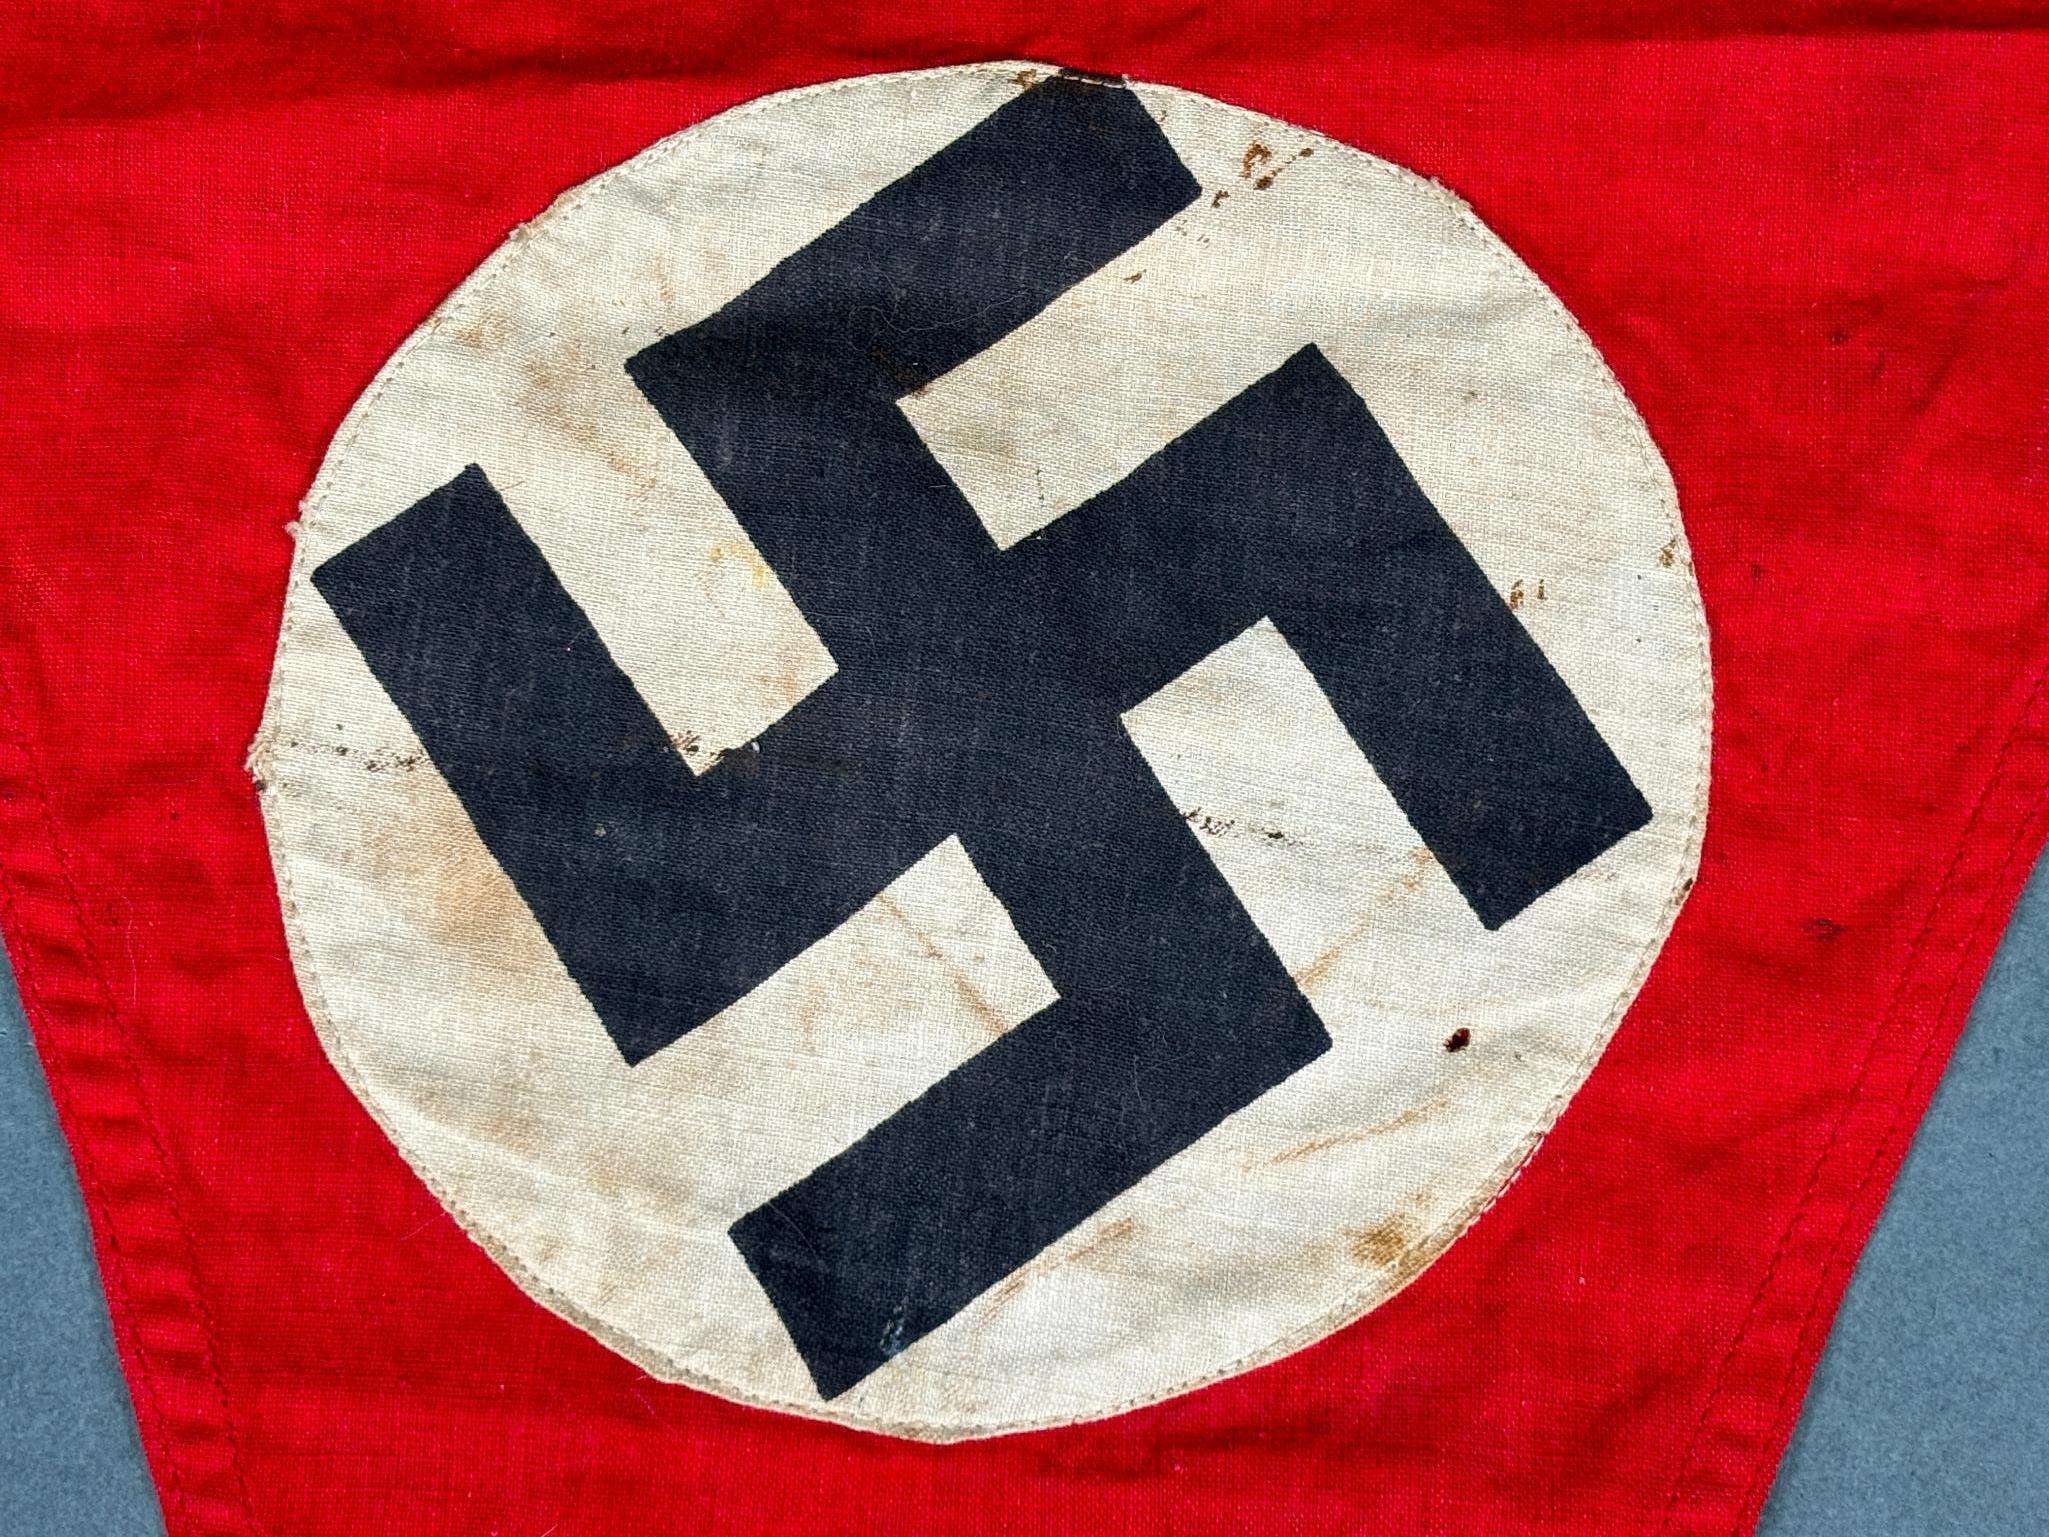 WWII NAZI GERMAN NSDAP PENNANT - FLAG